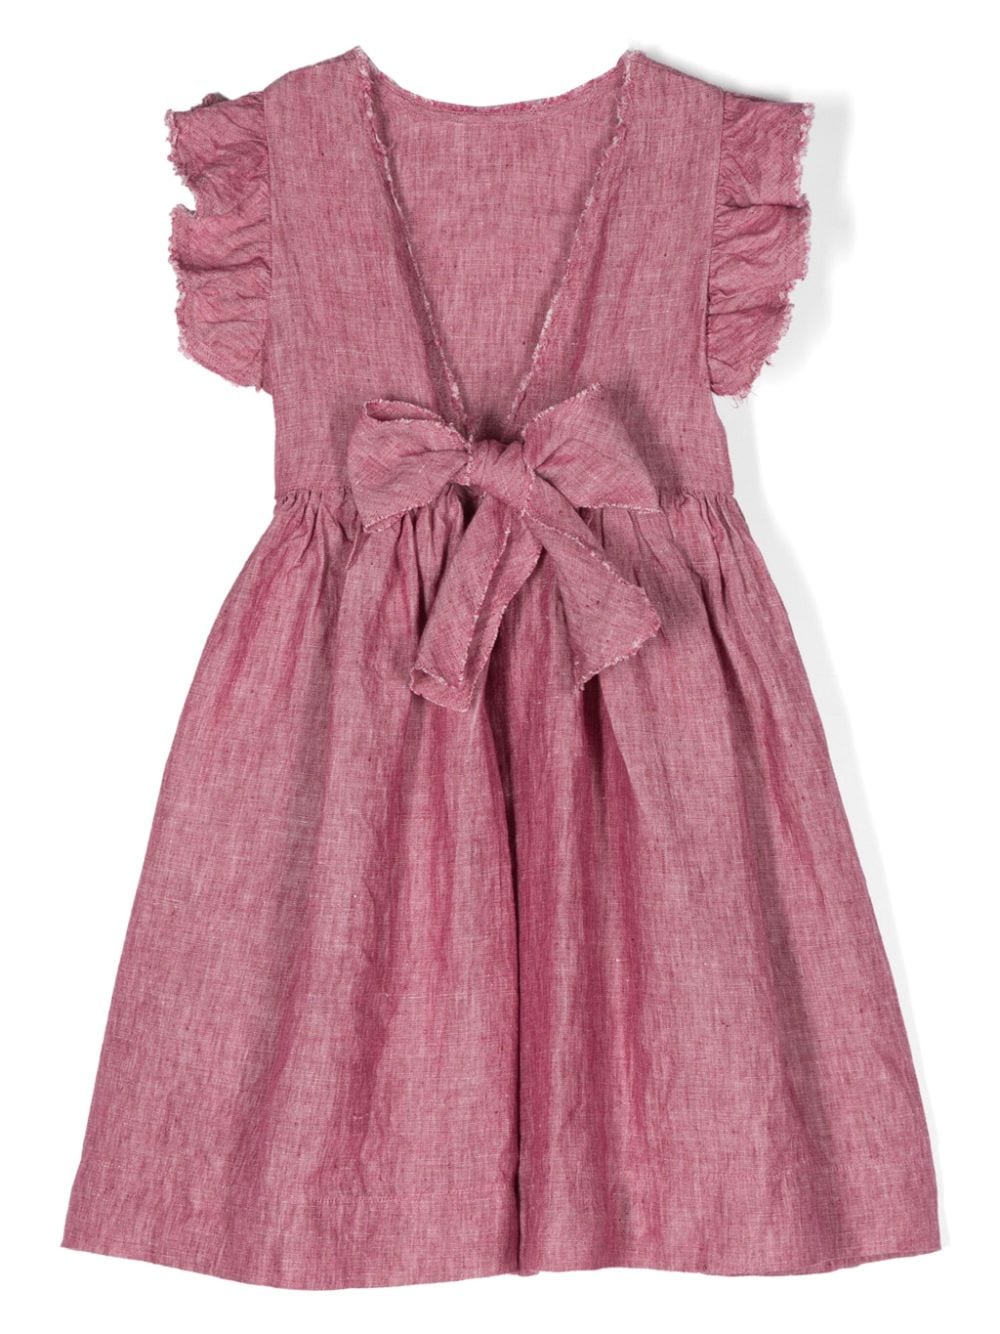 Grape purple dress for girls in linen